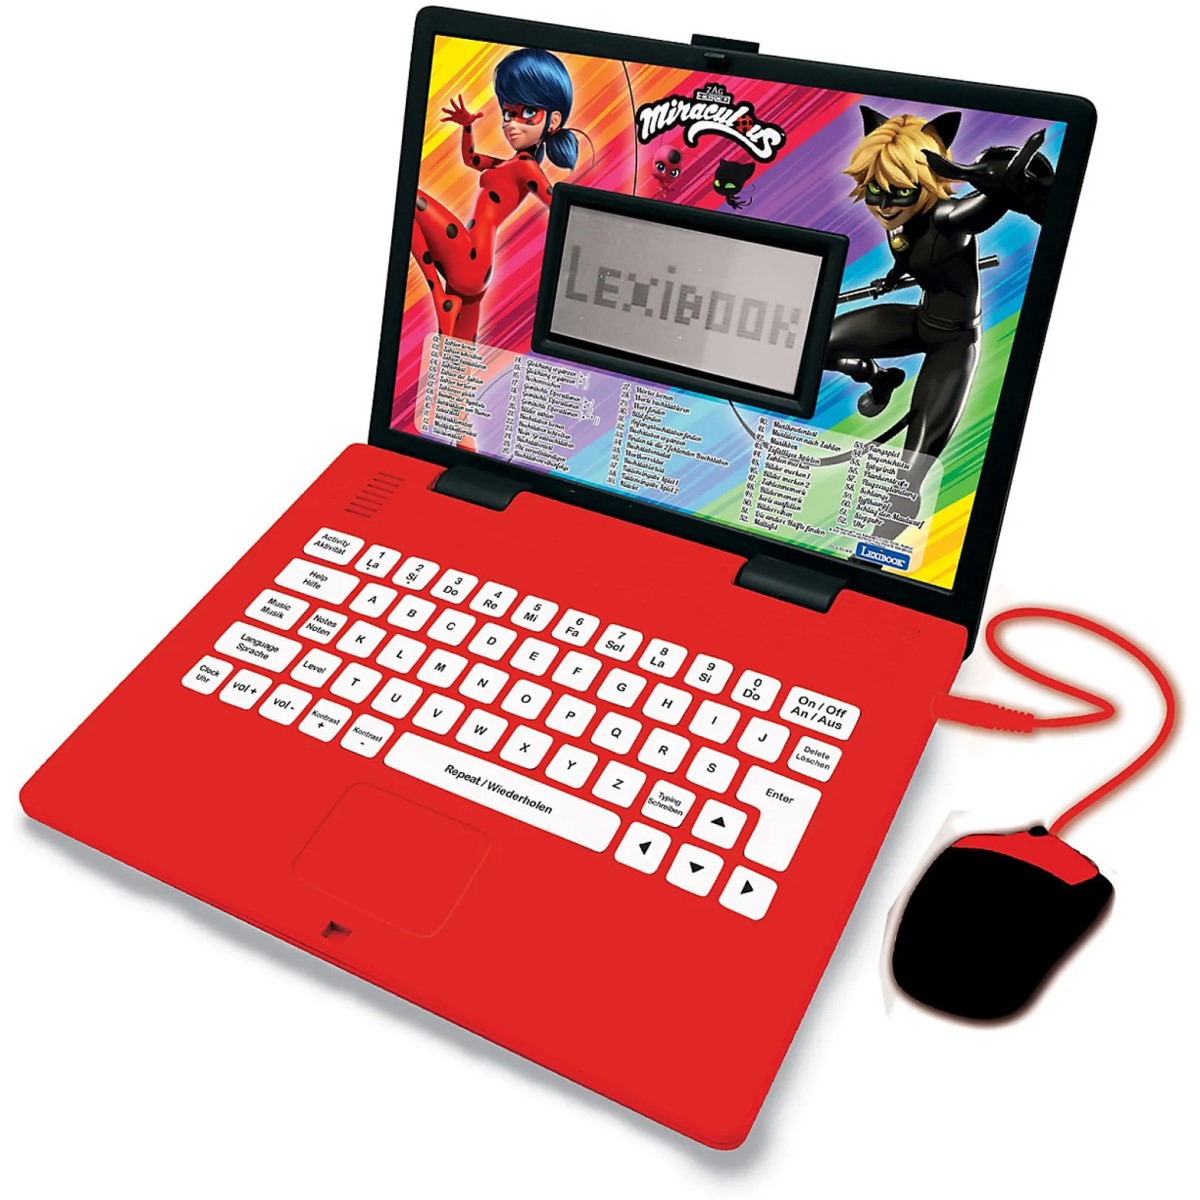 Laptop Ladybug Miraculous Lernlaptop